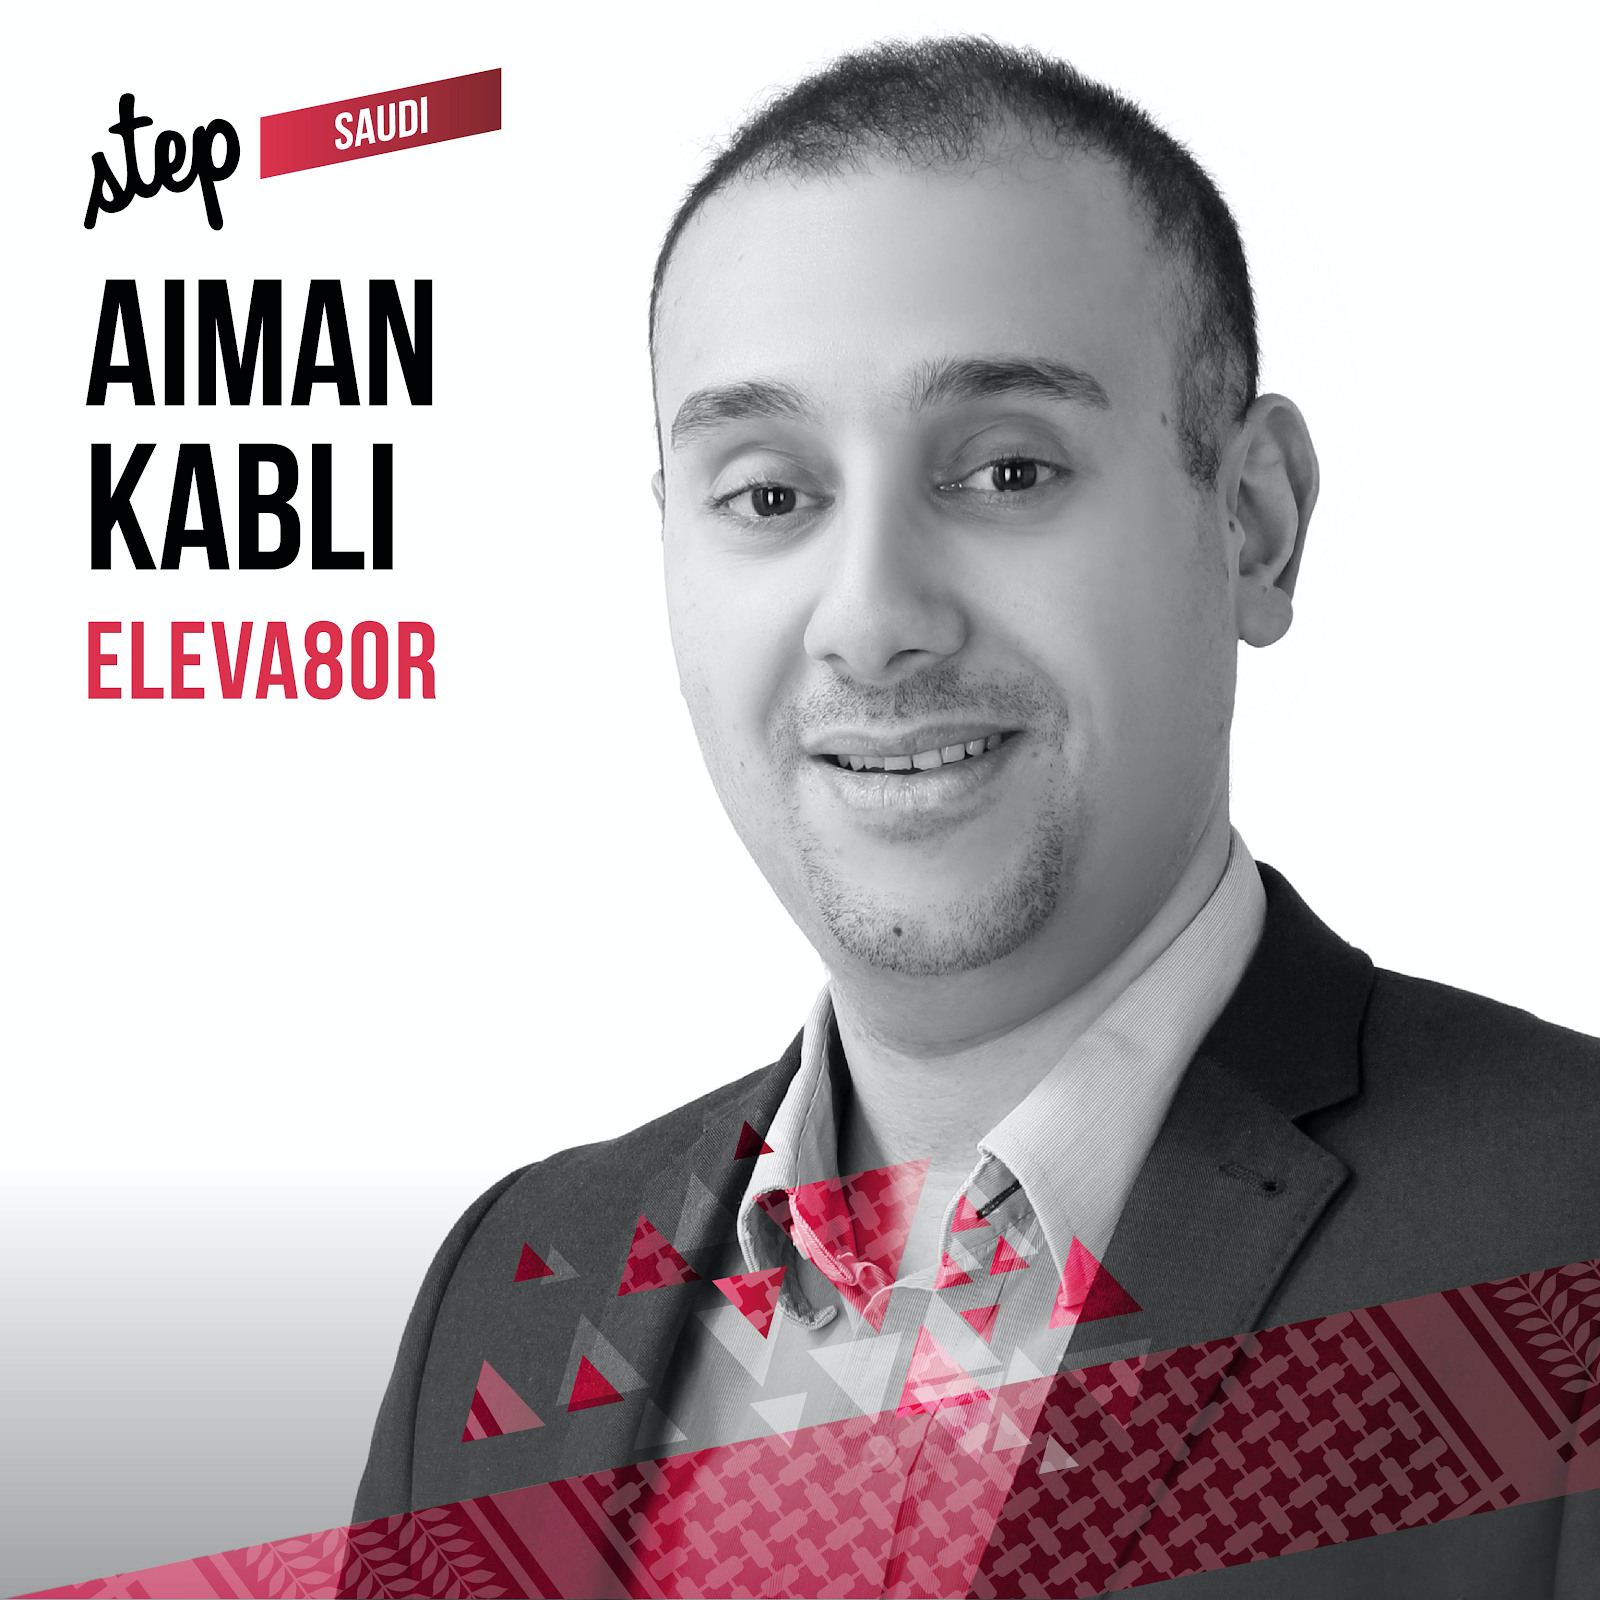 Aiman Kabli, Thursday, October 1, 2020, Press release picture